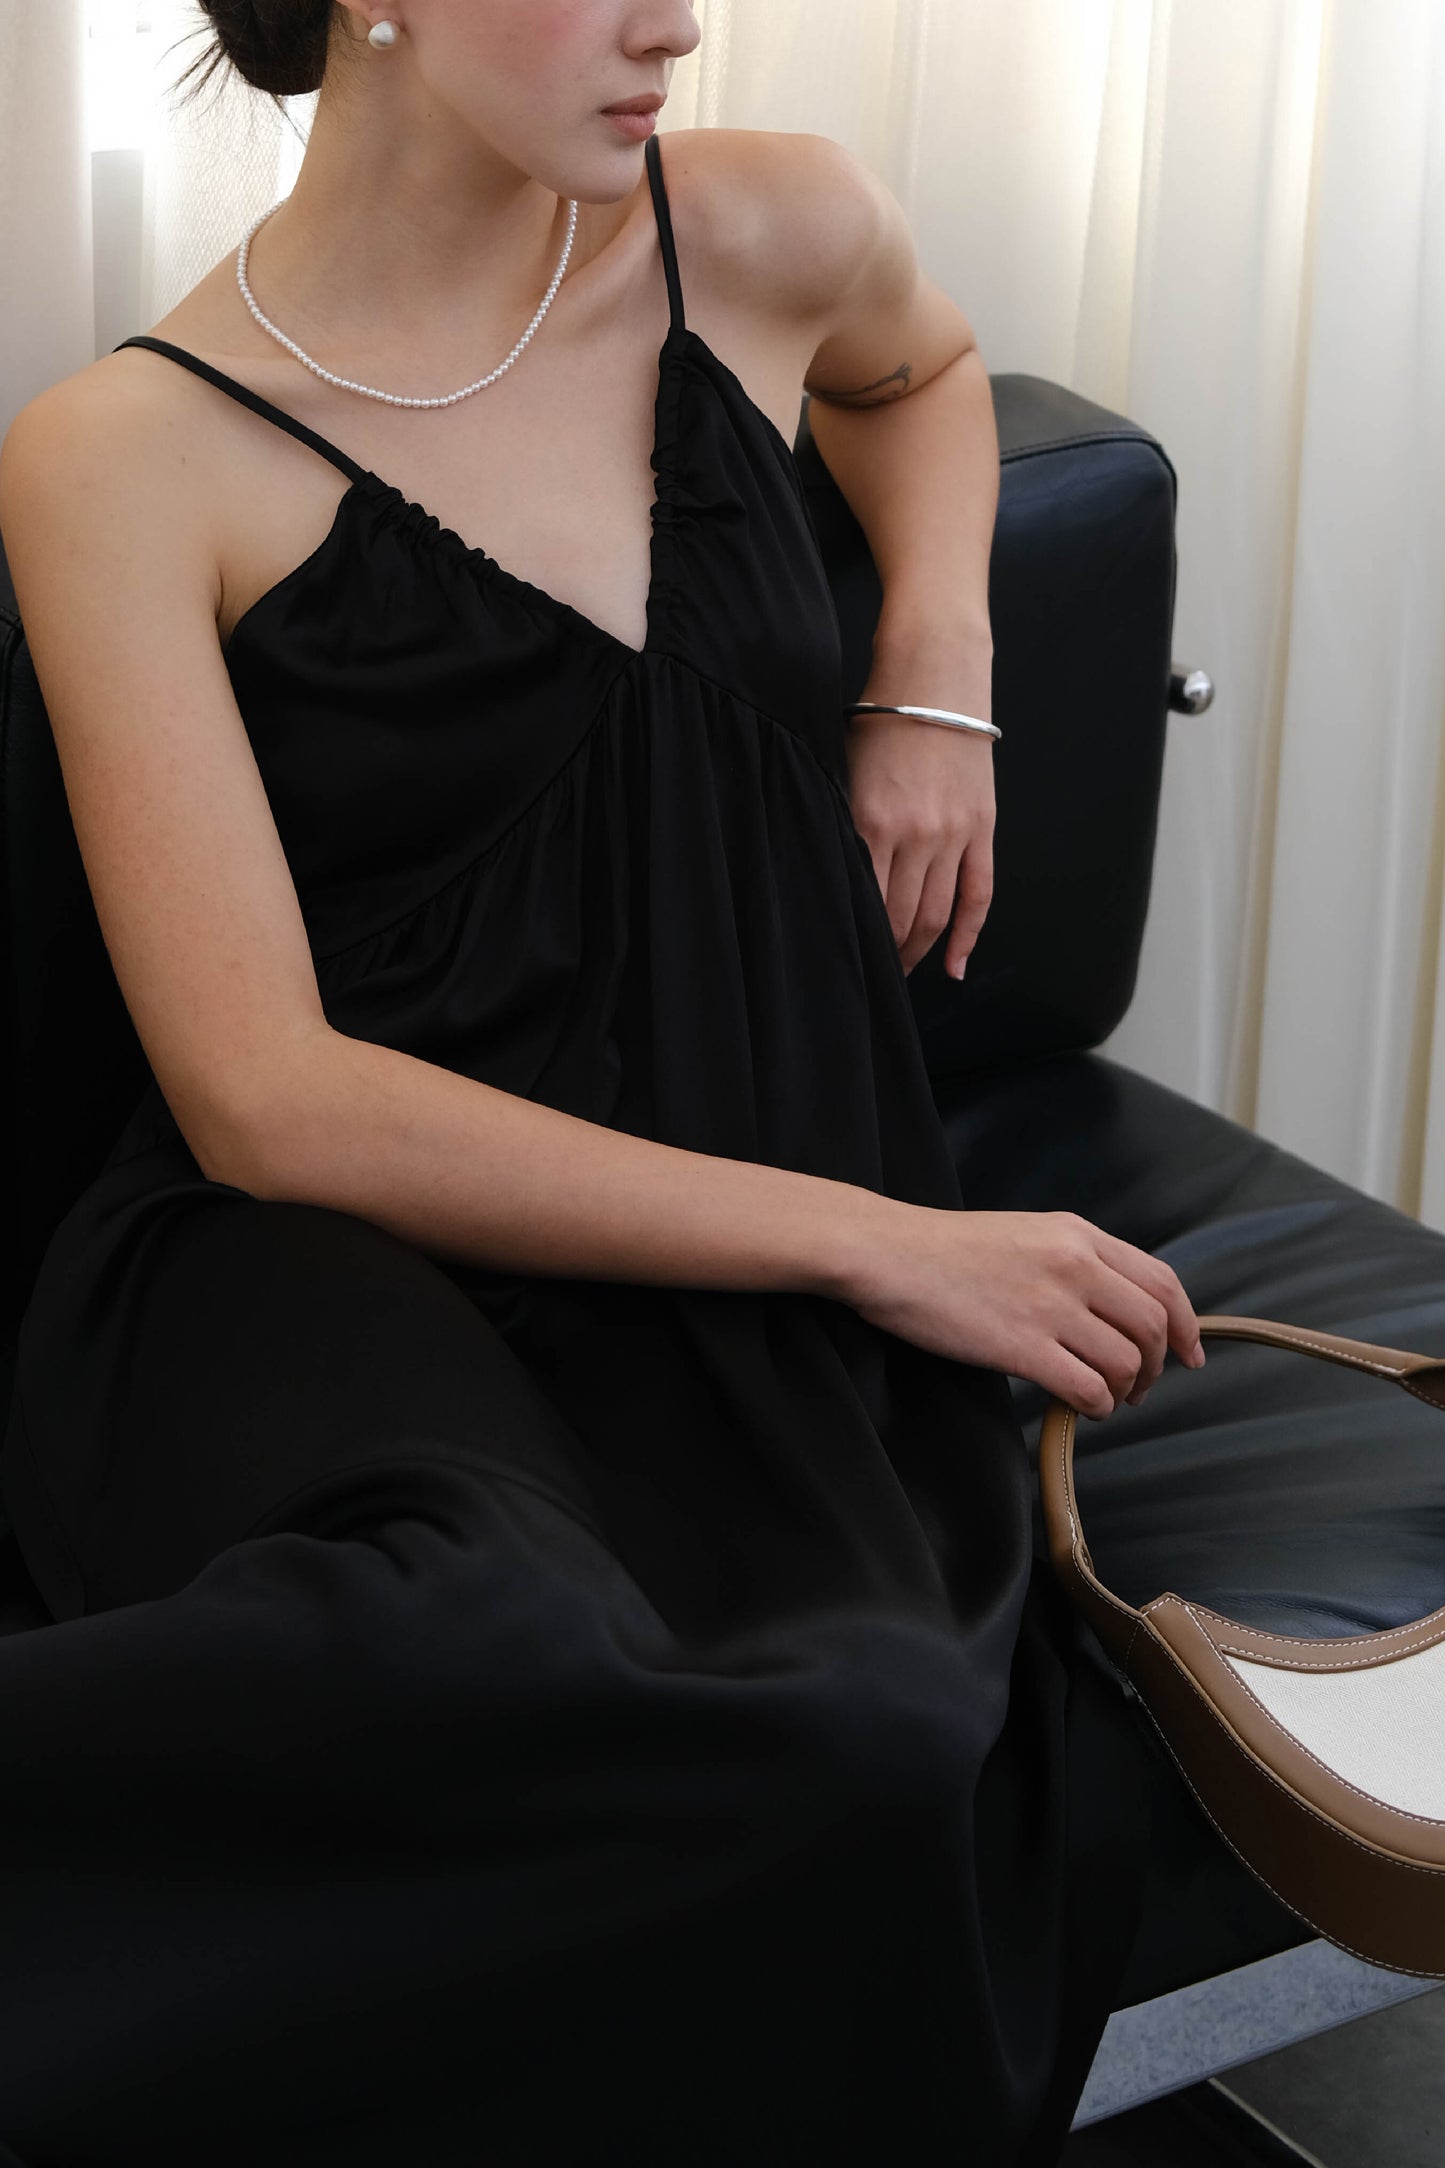 V-neck Sleeves tank top dress in classic black